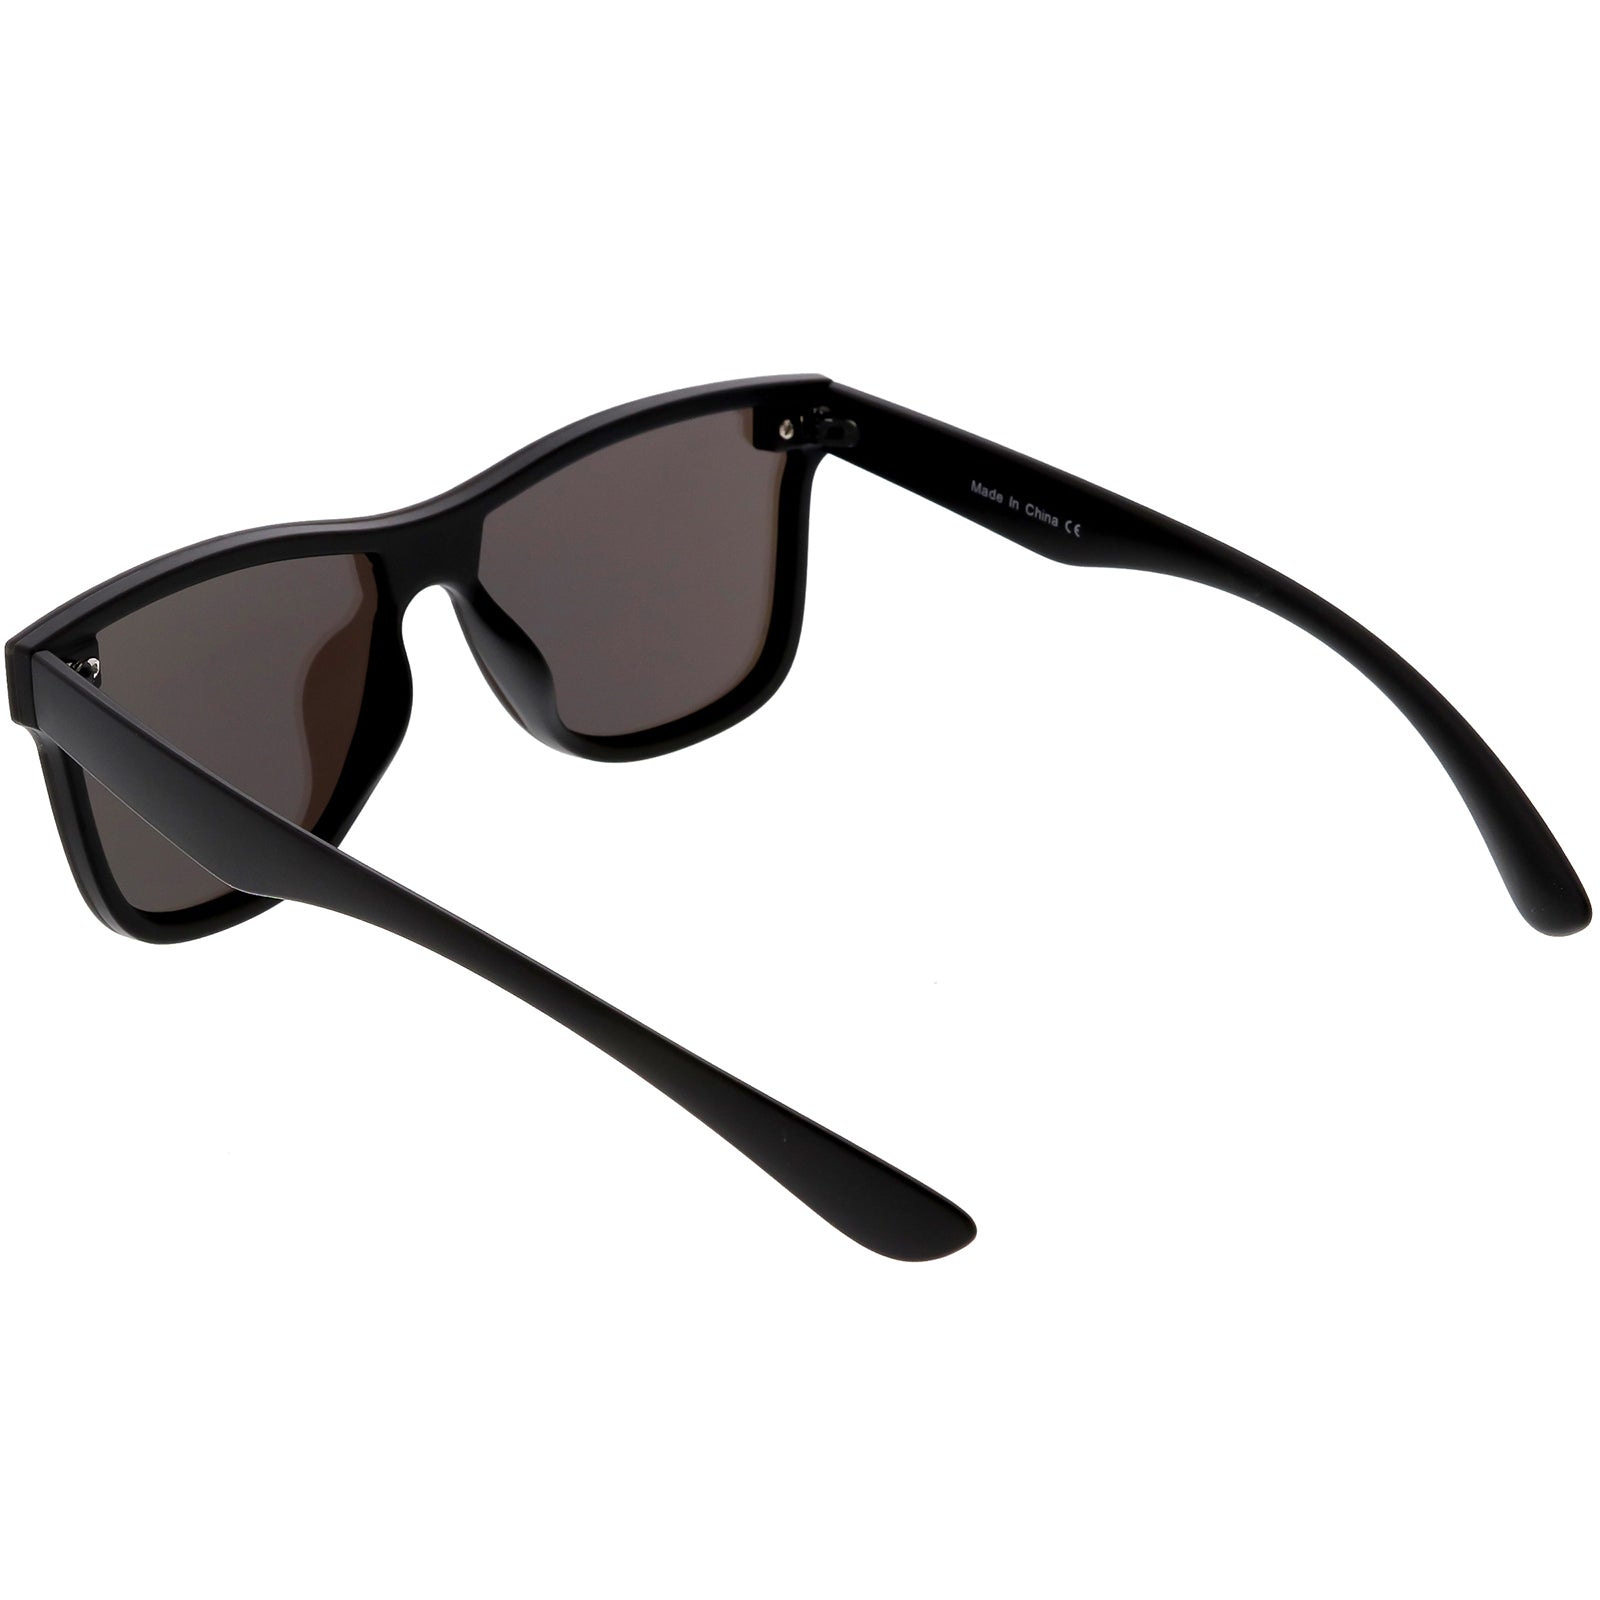 Futuristic Horn Rimmed Rimless Sunglasses Mirrored Shield Lens 59mm